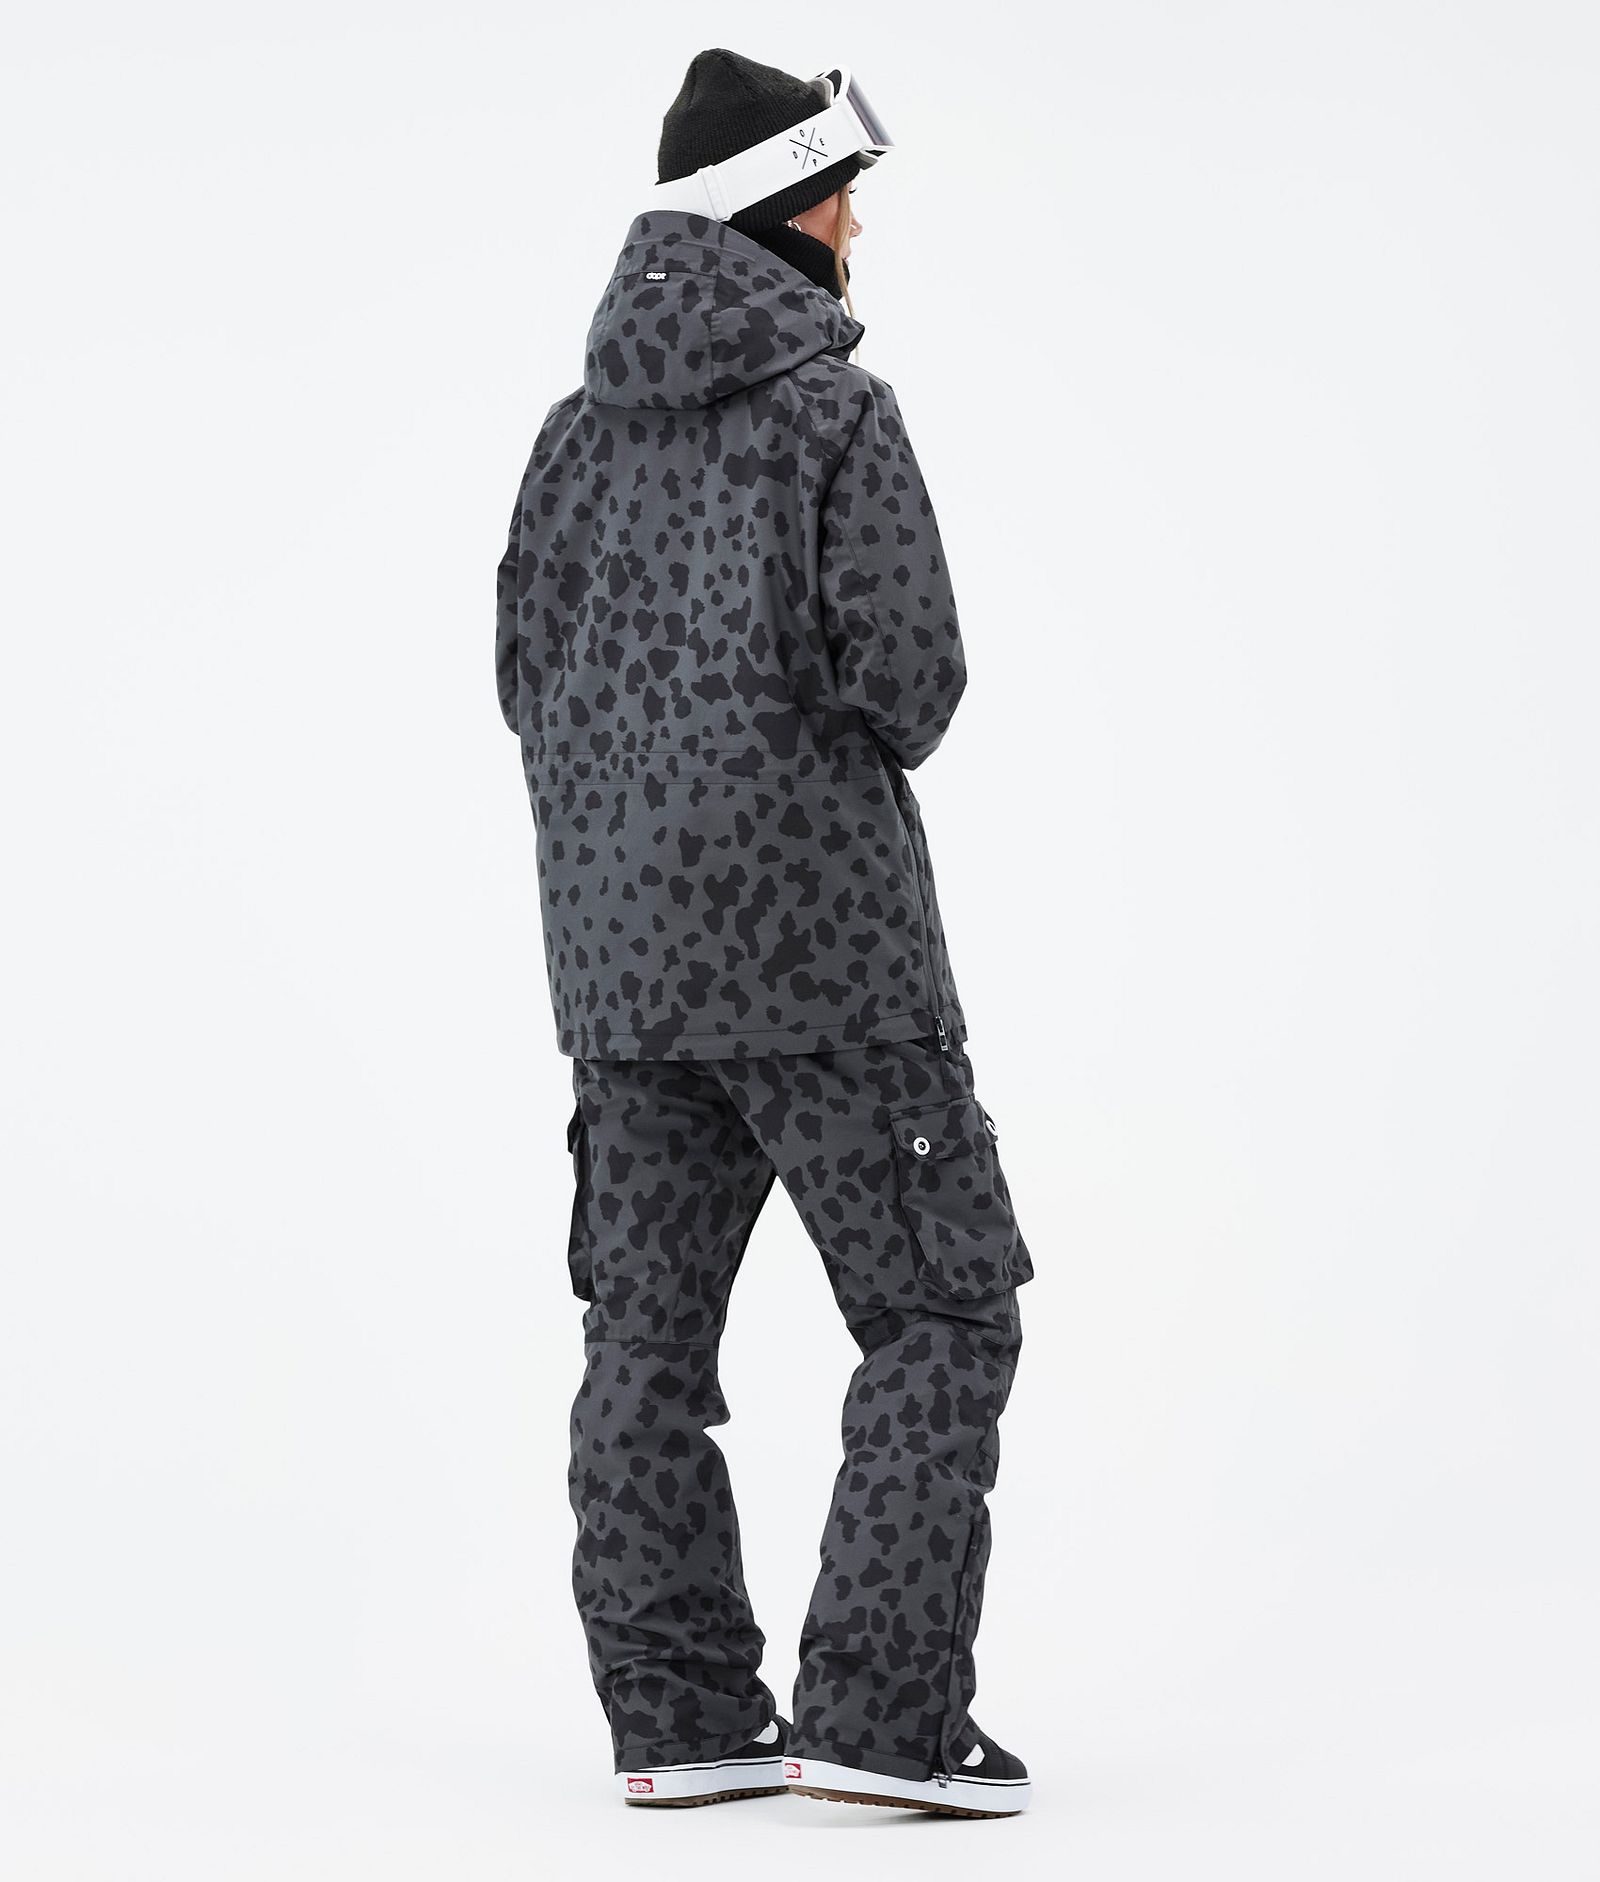 Annok W Snowboard Outfit Dame Dots Phantom